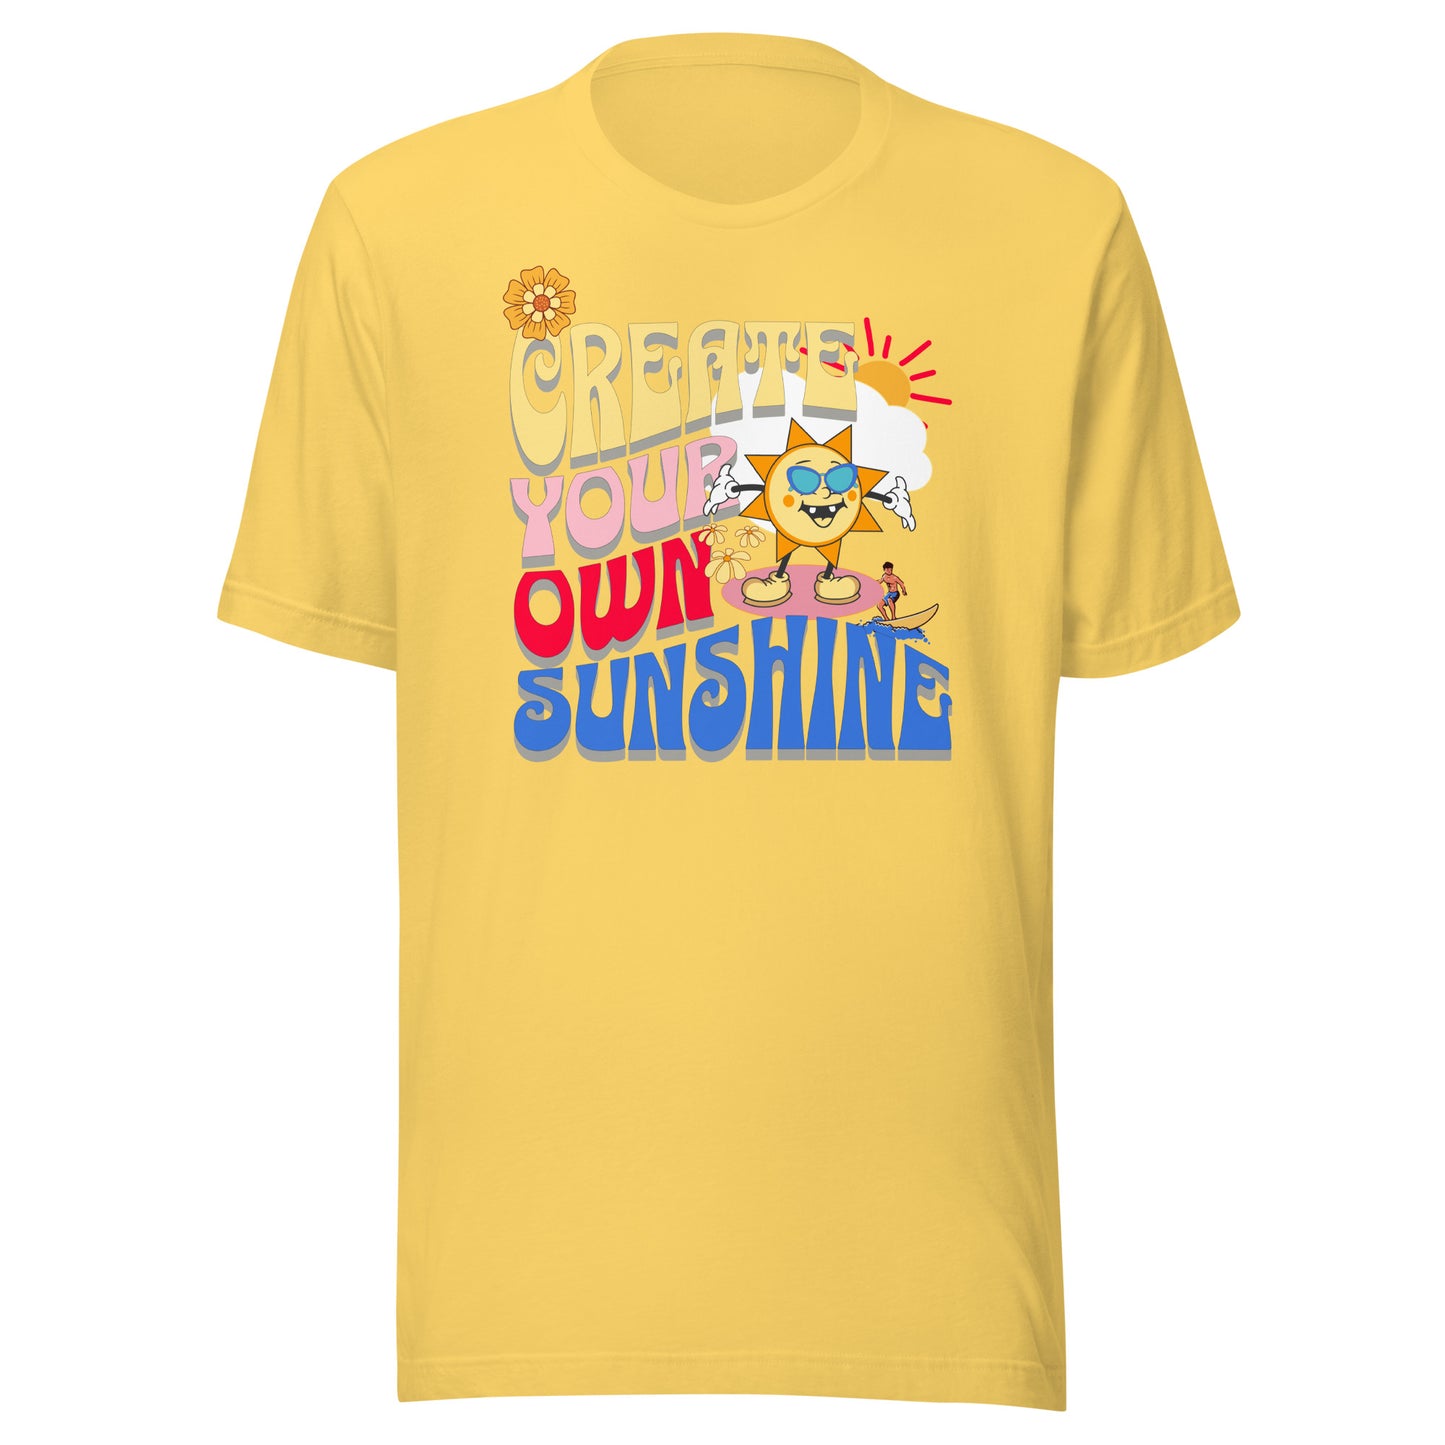 Create Your Own Sunshine Unisex t-shirt